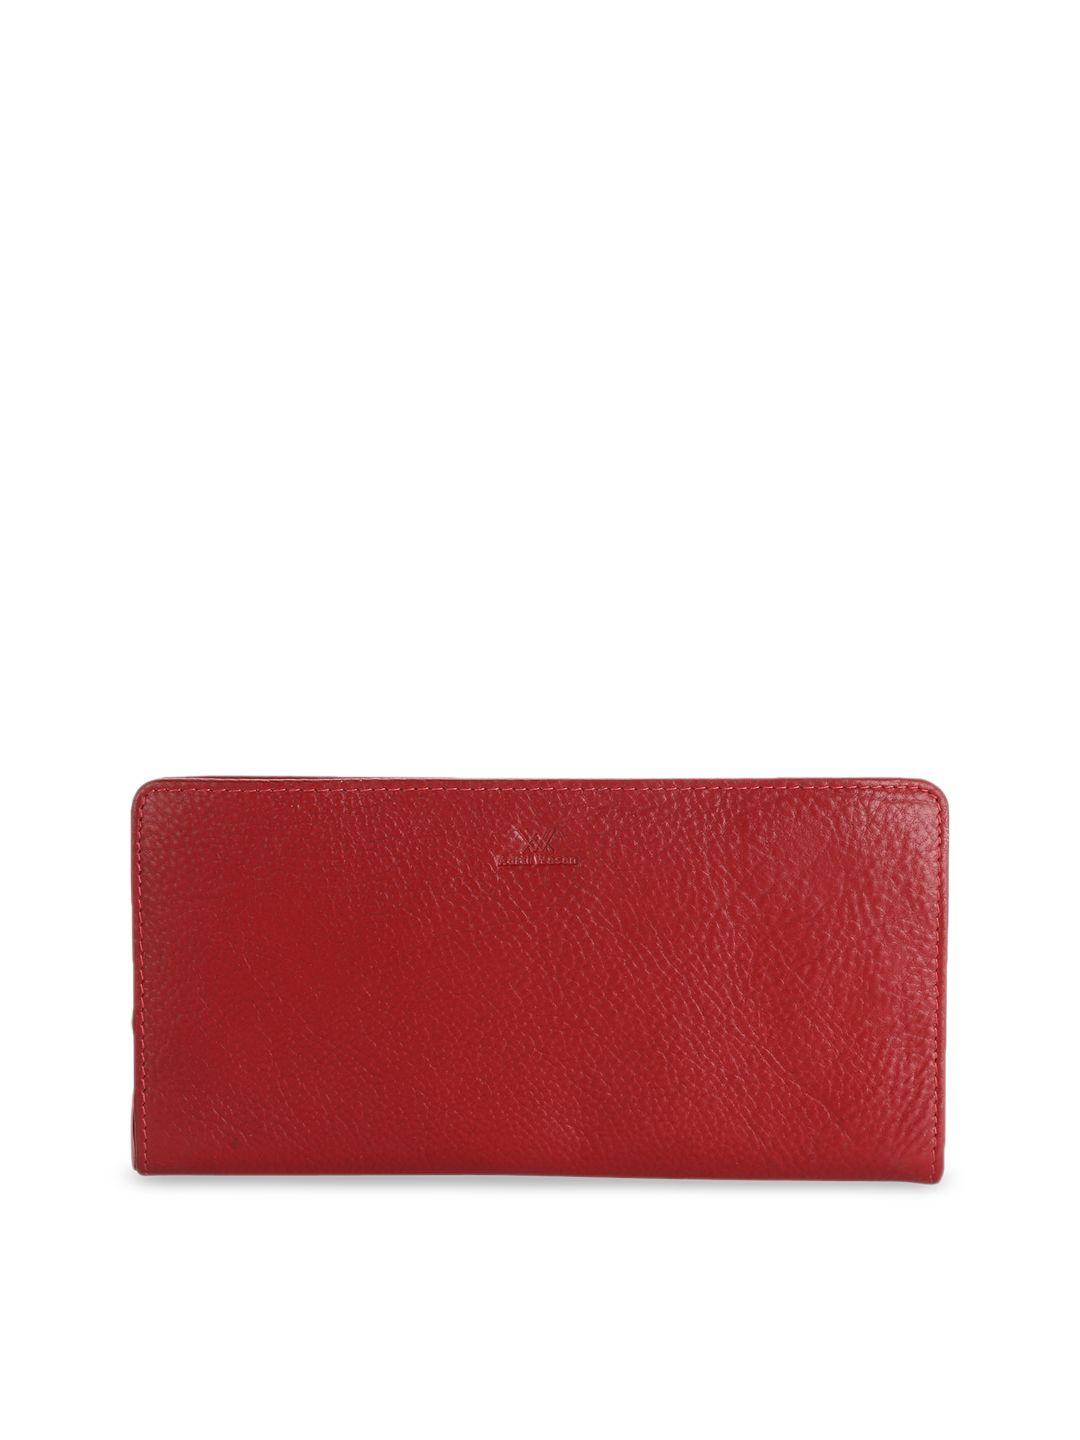 aditi wasan women maroon solid genuine leather zip around wallet